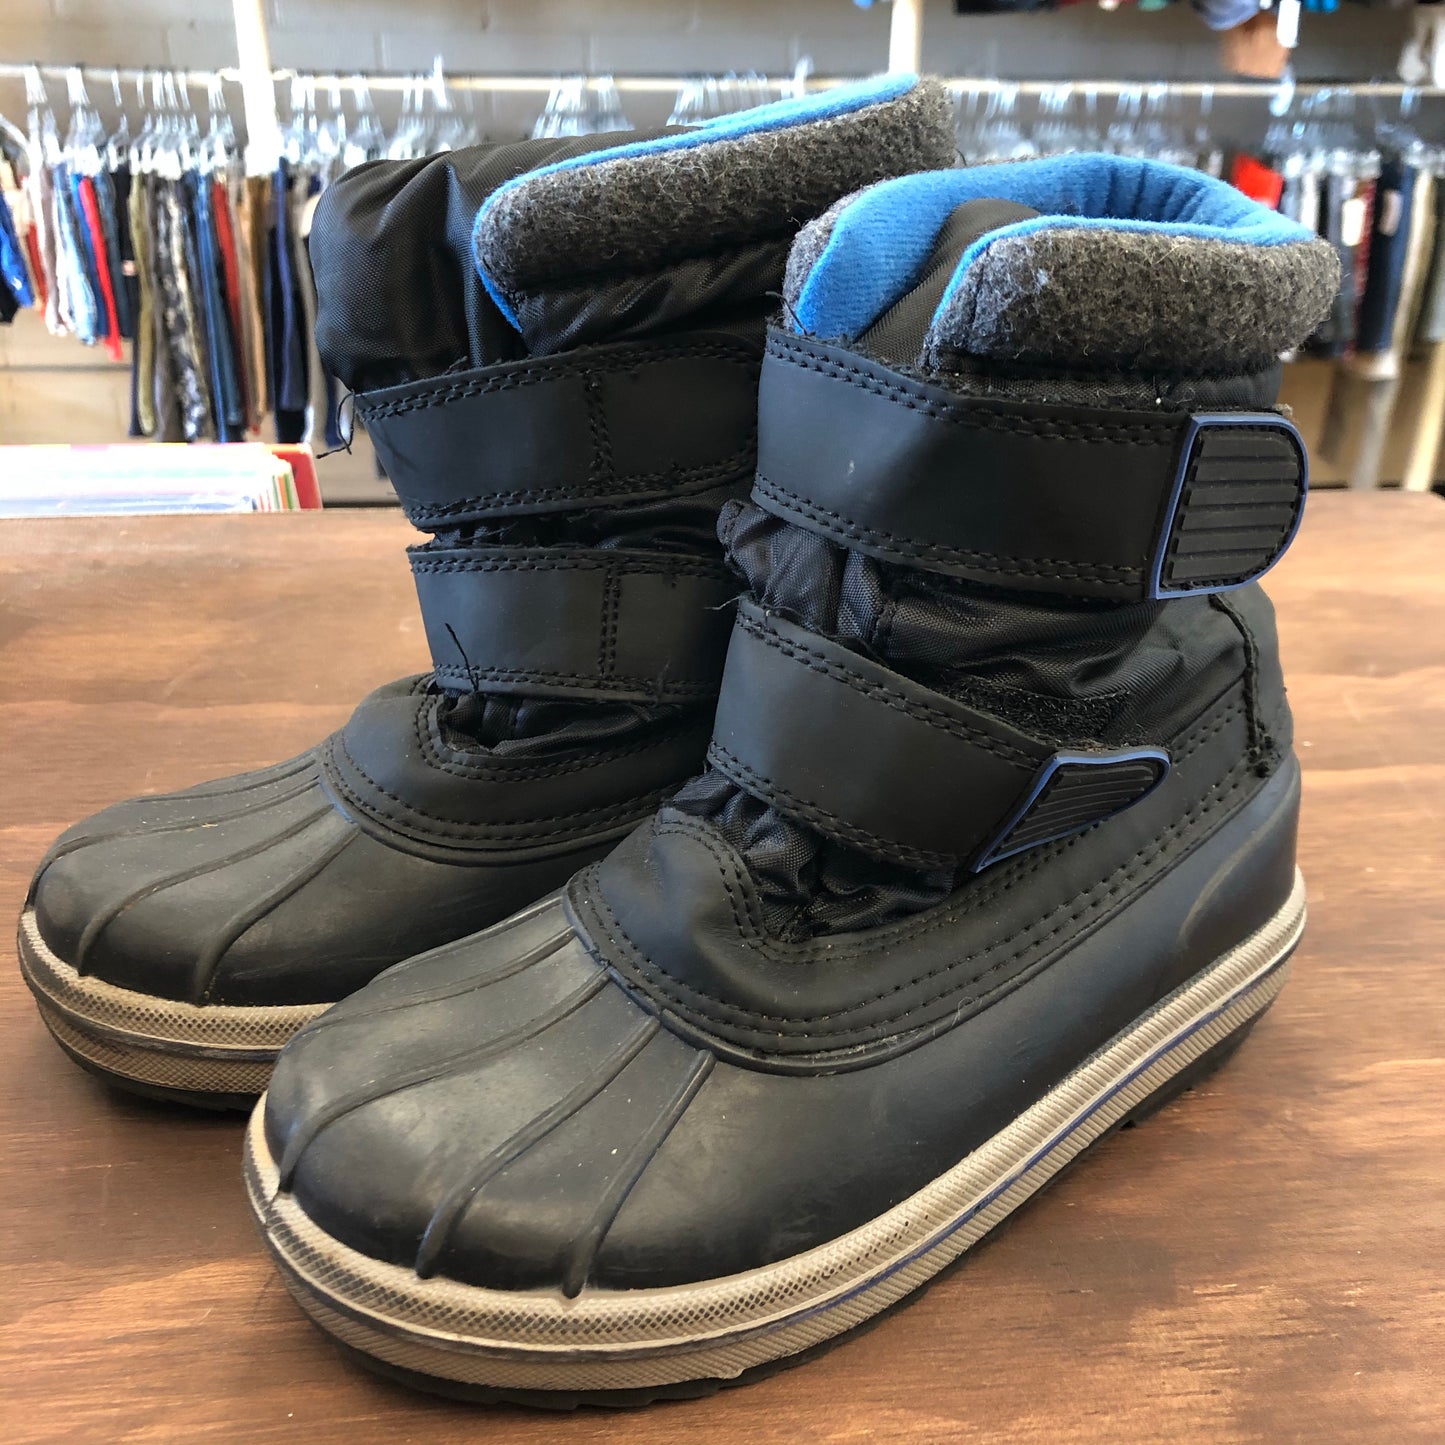 Black & Blue Velcro Snow Boots